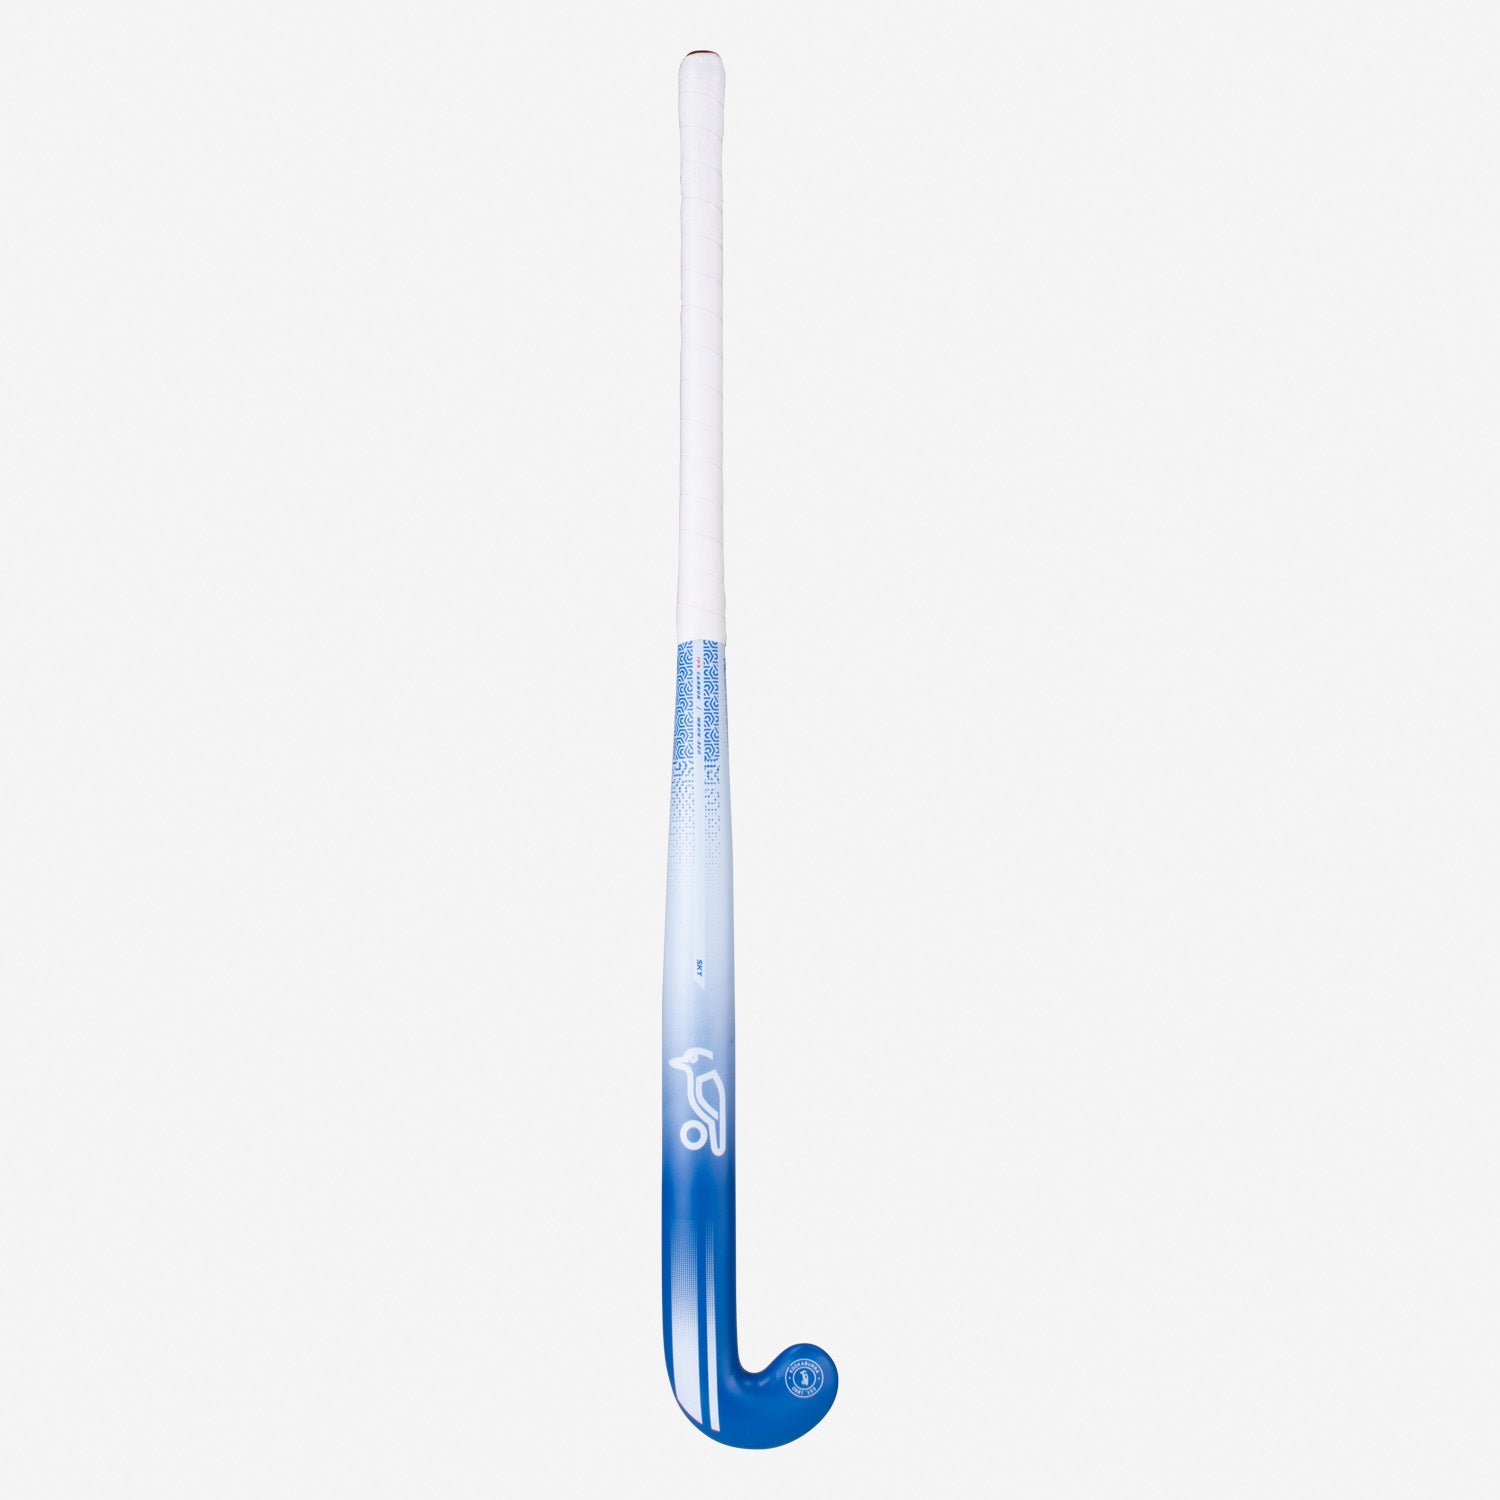 Kookaburra Sky M-Bow Hockey Stick 6A2334